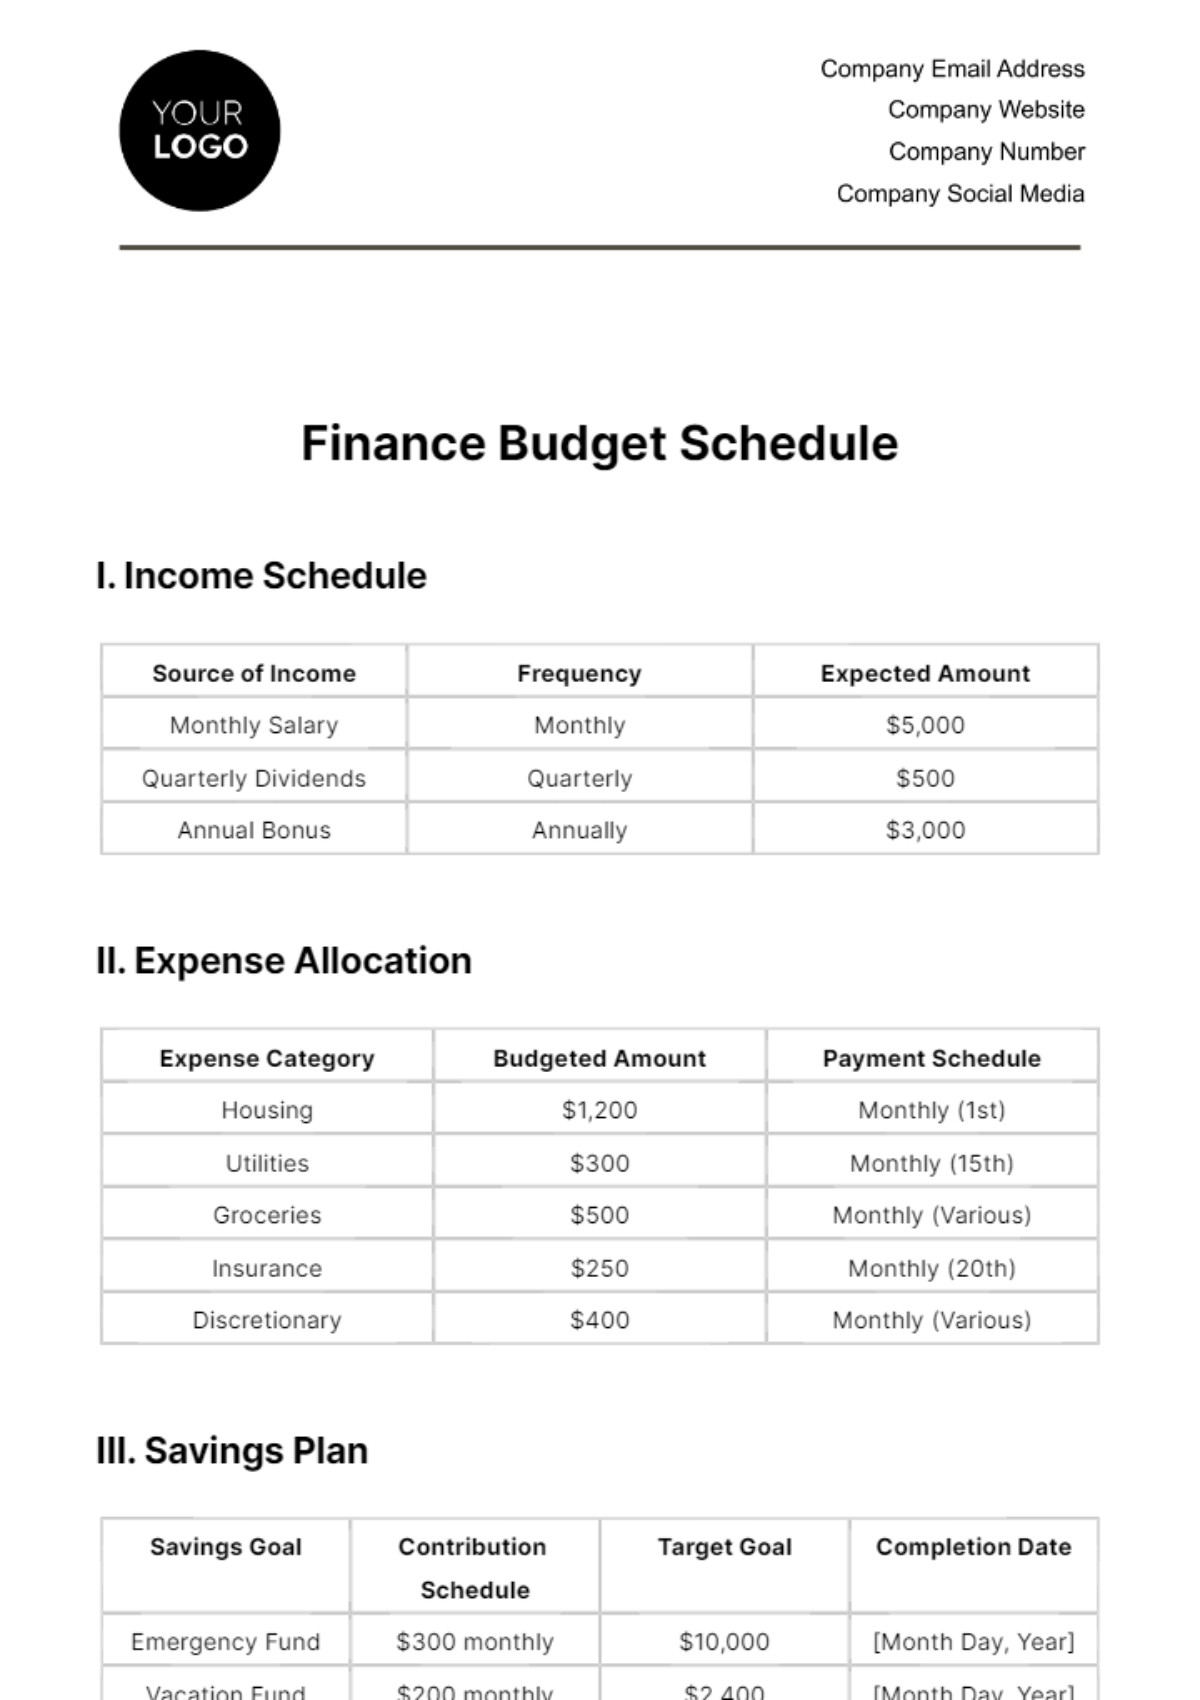 Free Finance Budget Schedule Template